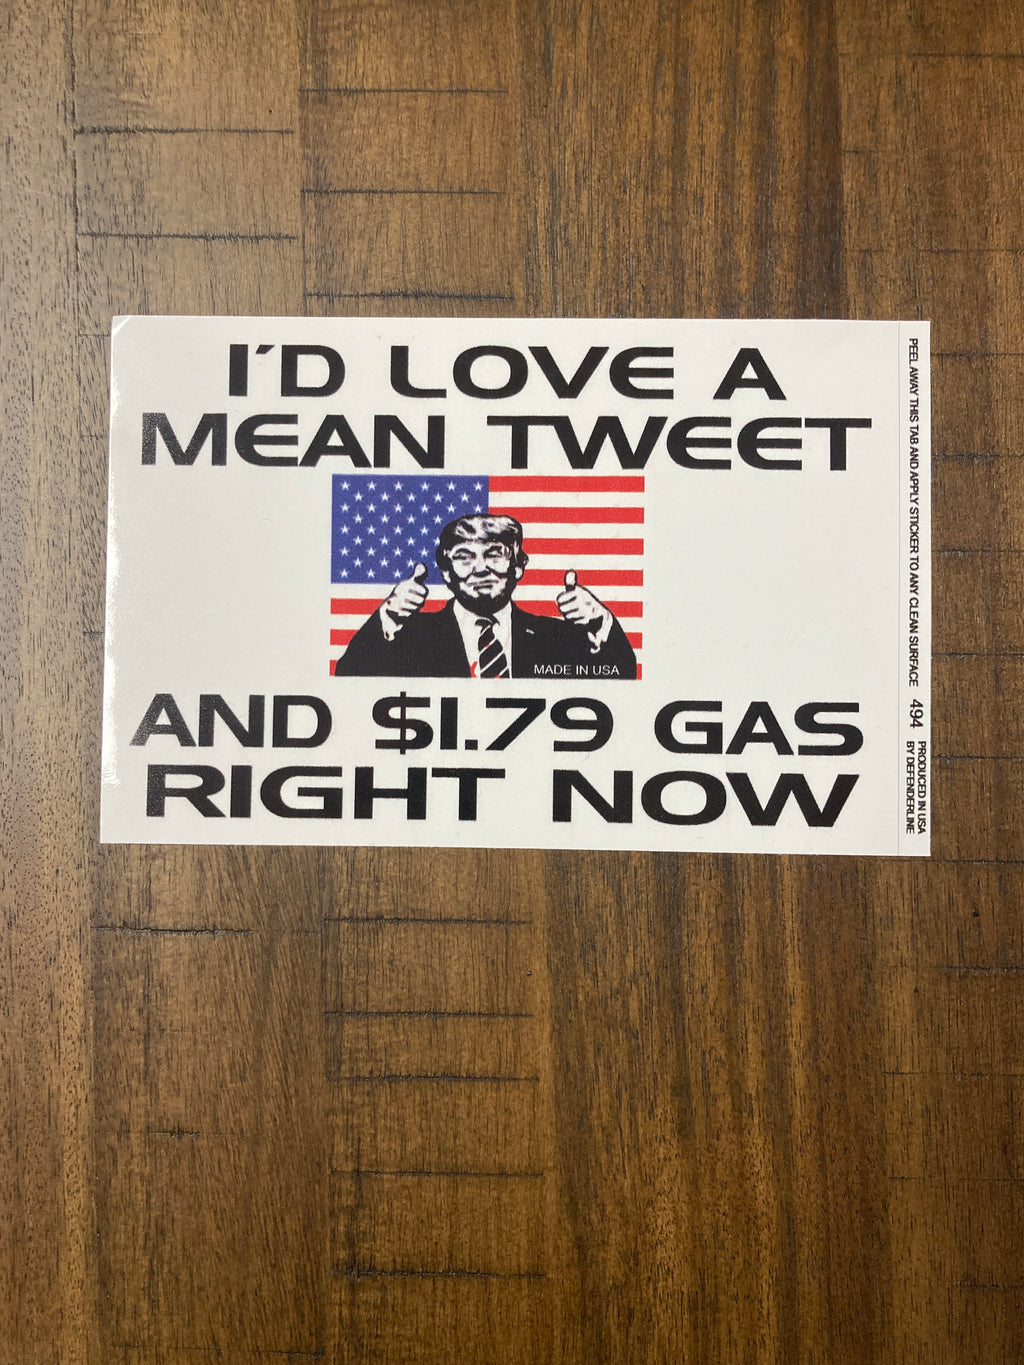 "I'd Love a Mean Tweet & $1.79 Gas Right Now!" Bumper Sticker